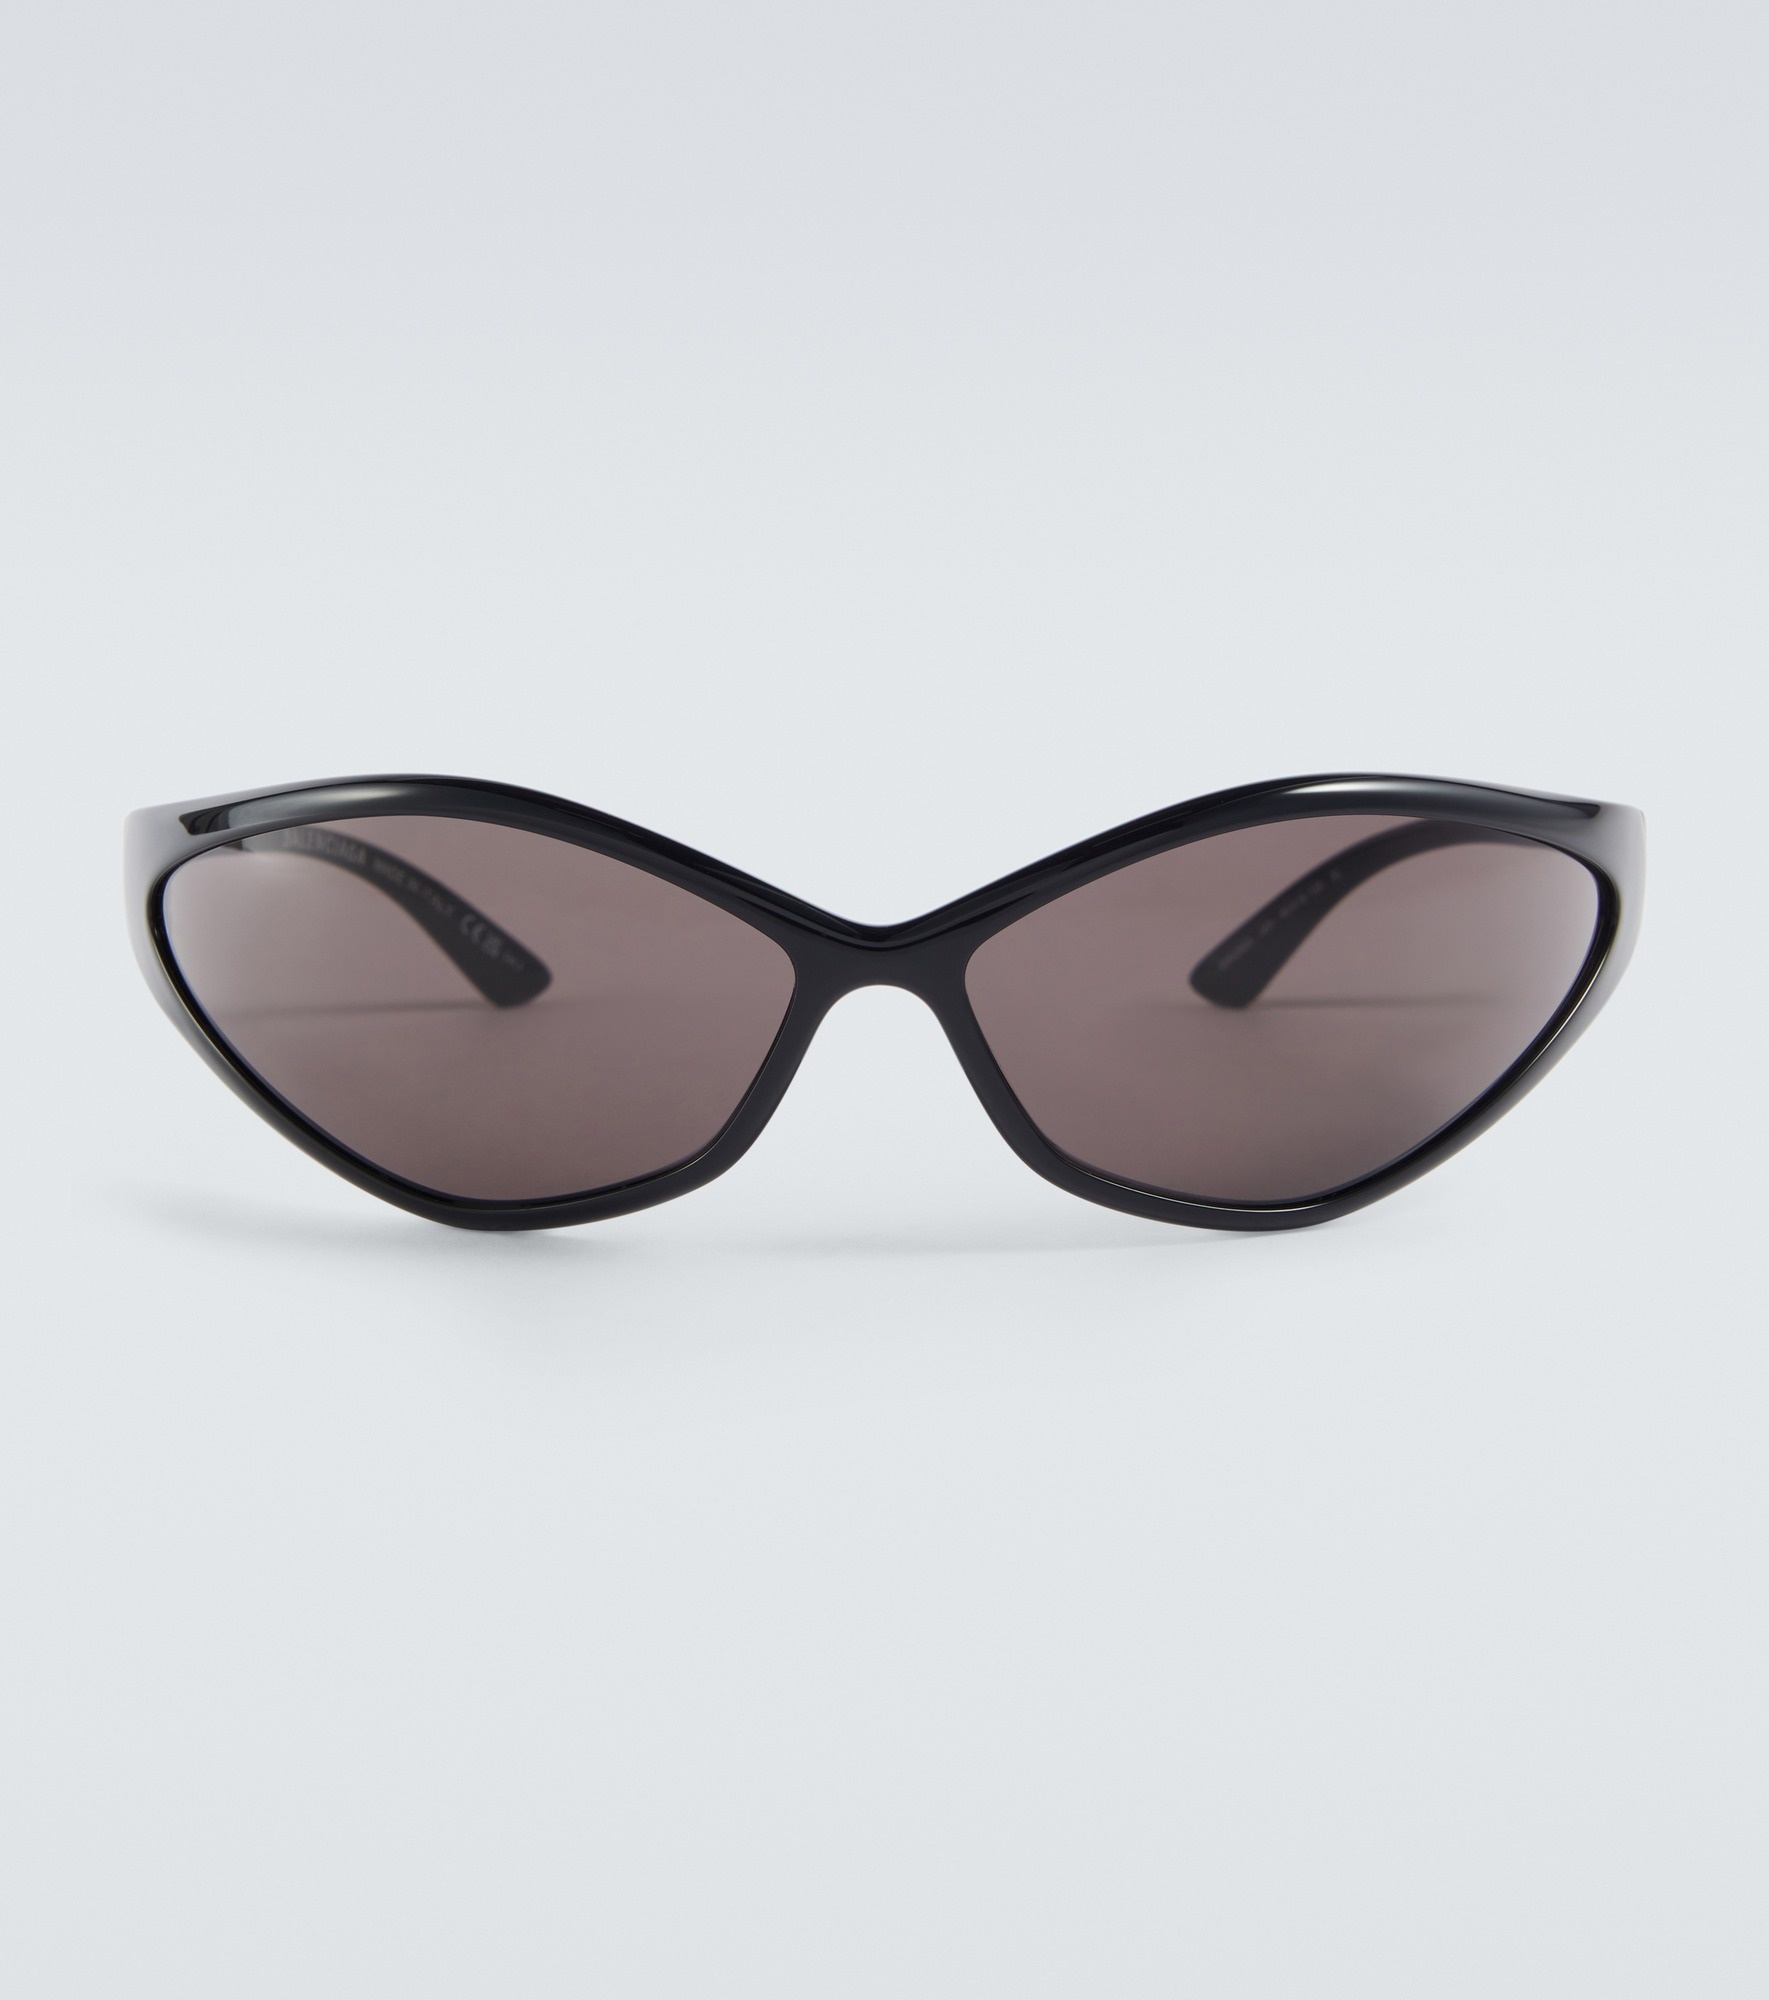 Oval sunglasses - 1